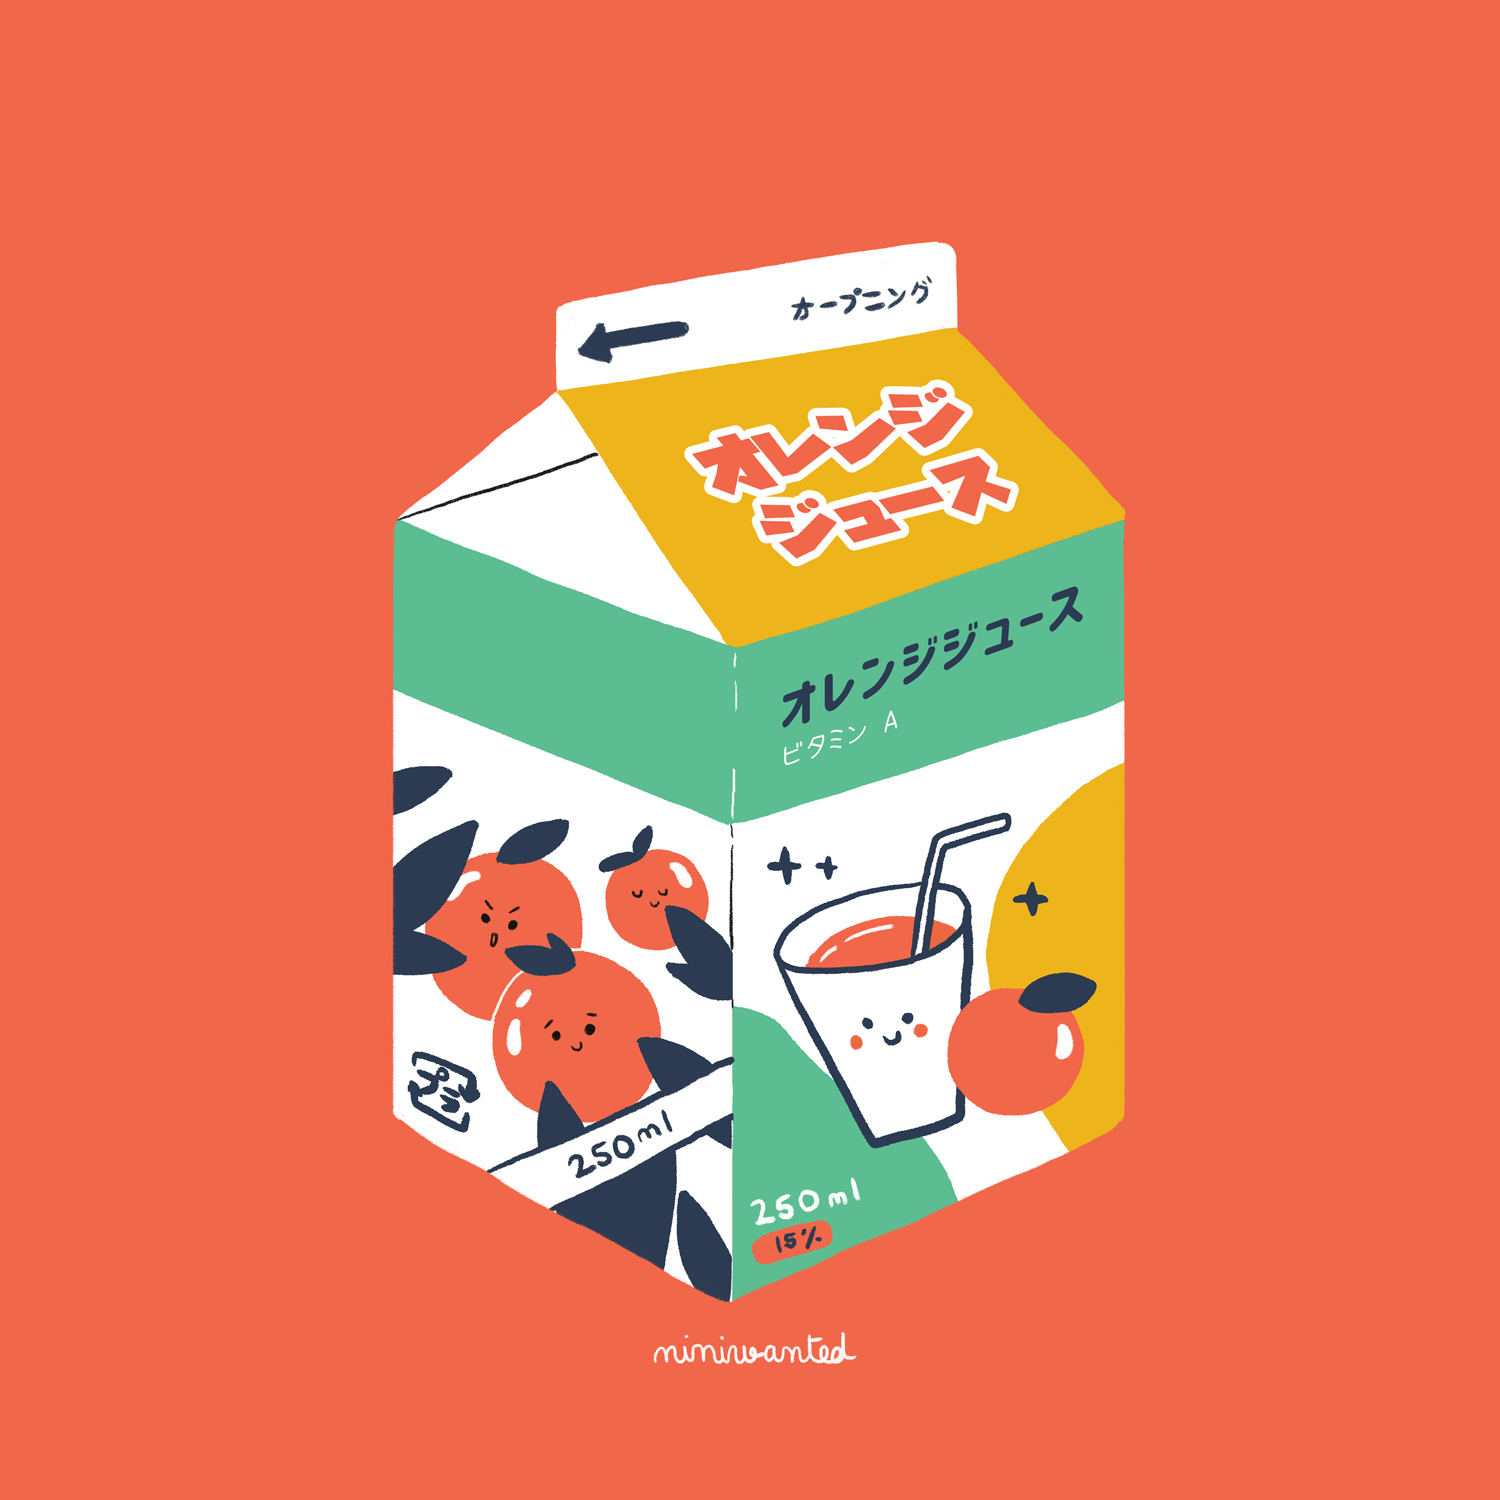 orange-juice-08-2018